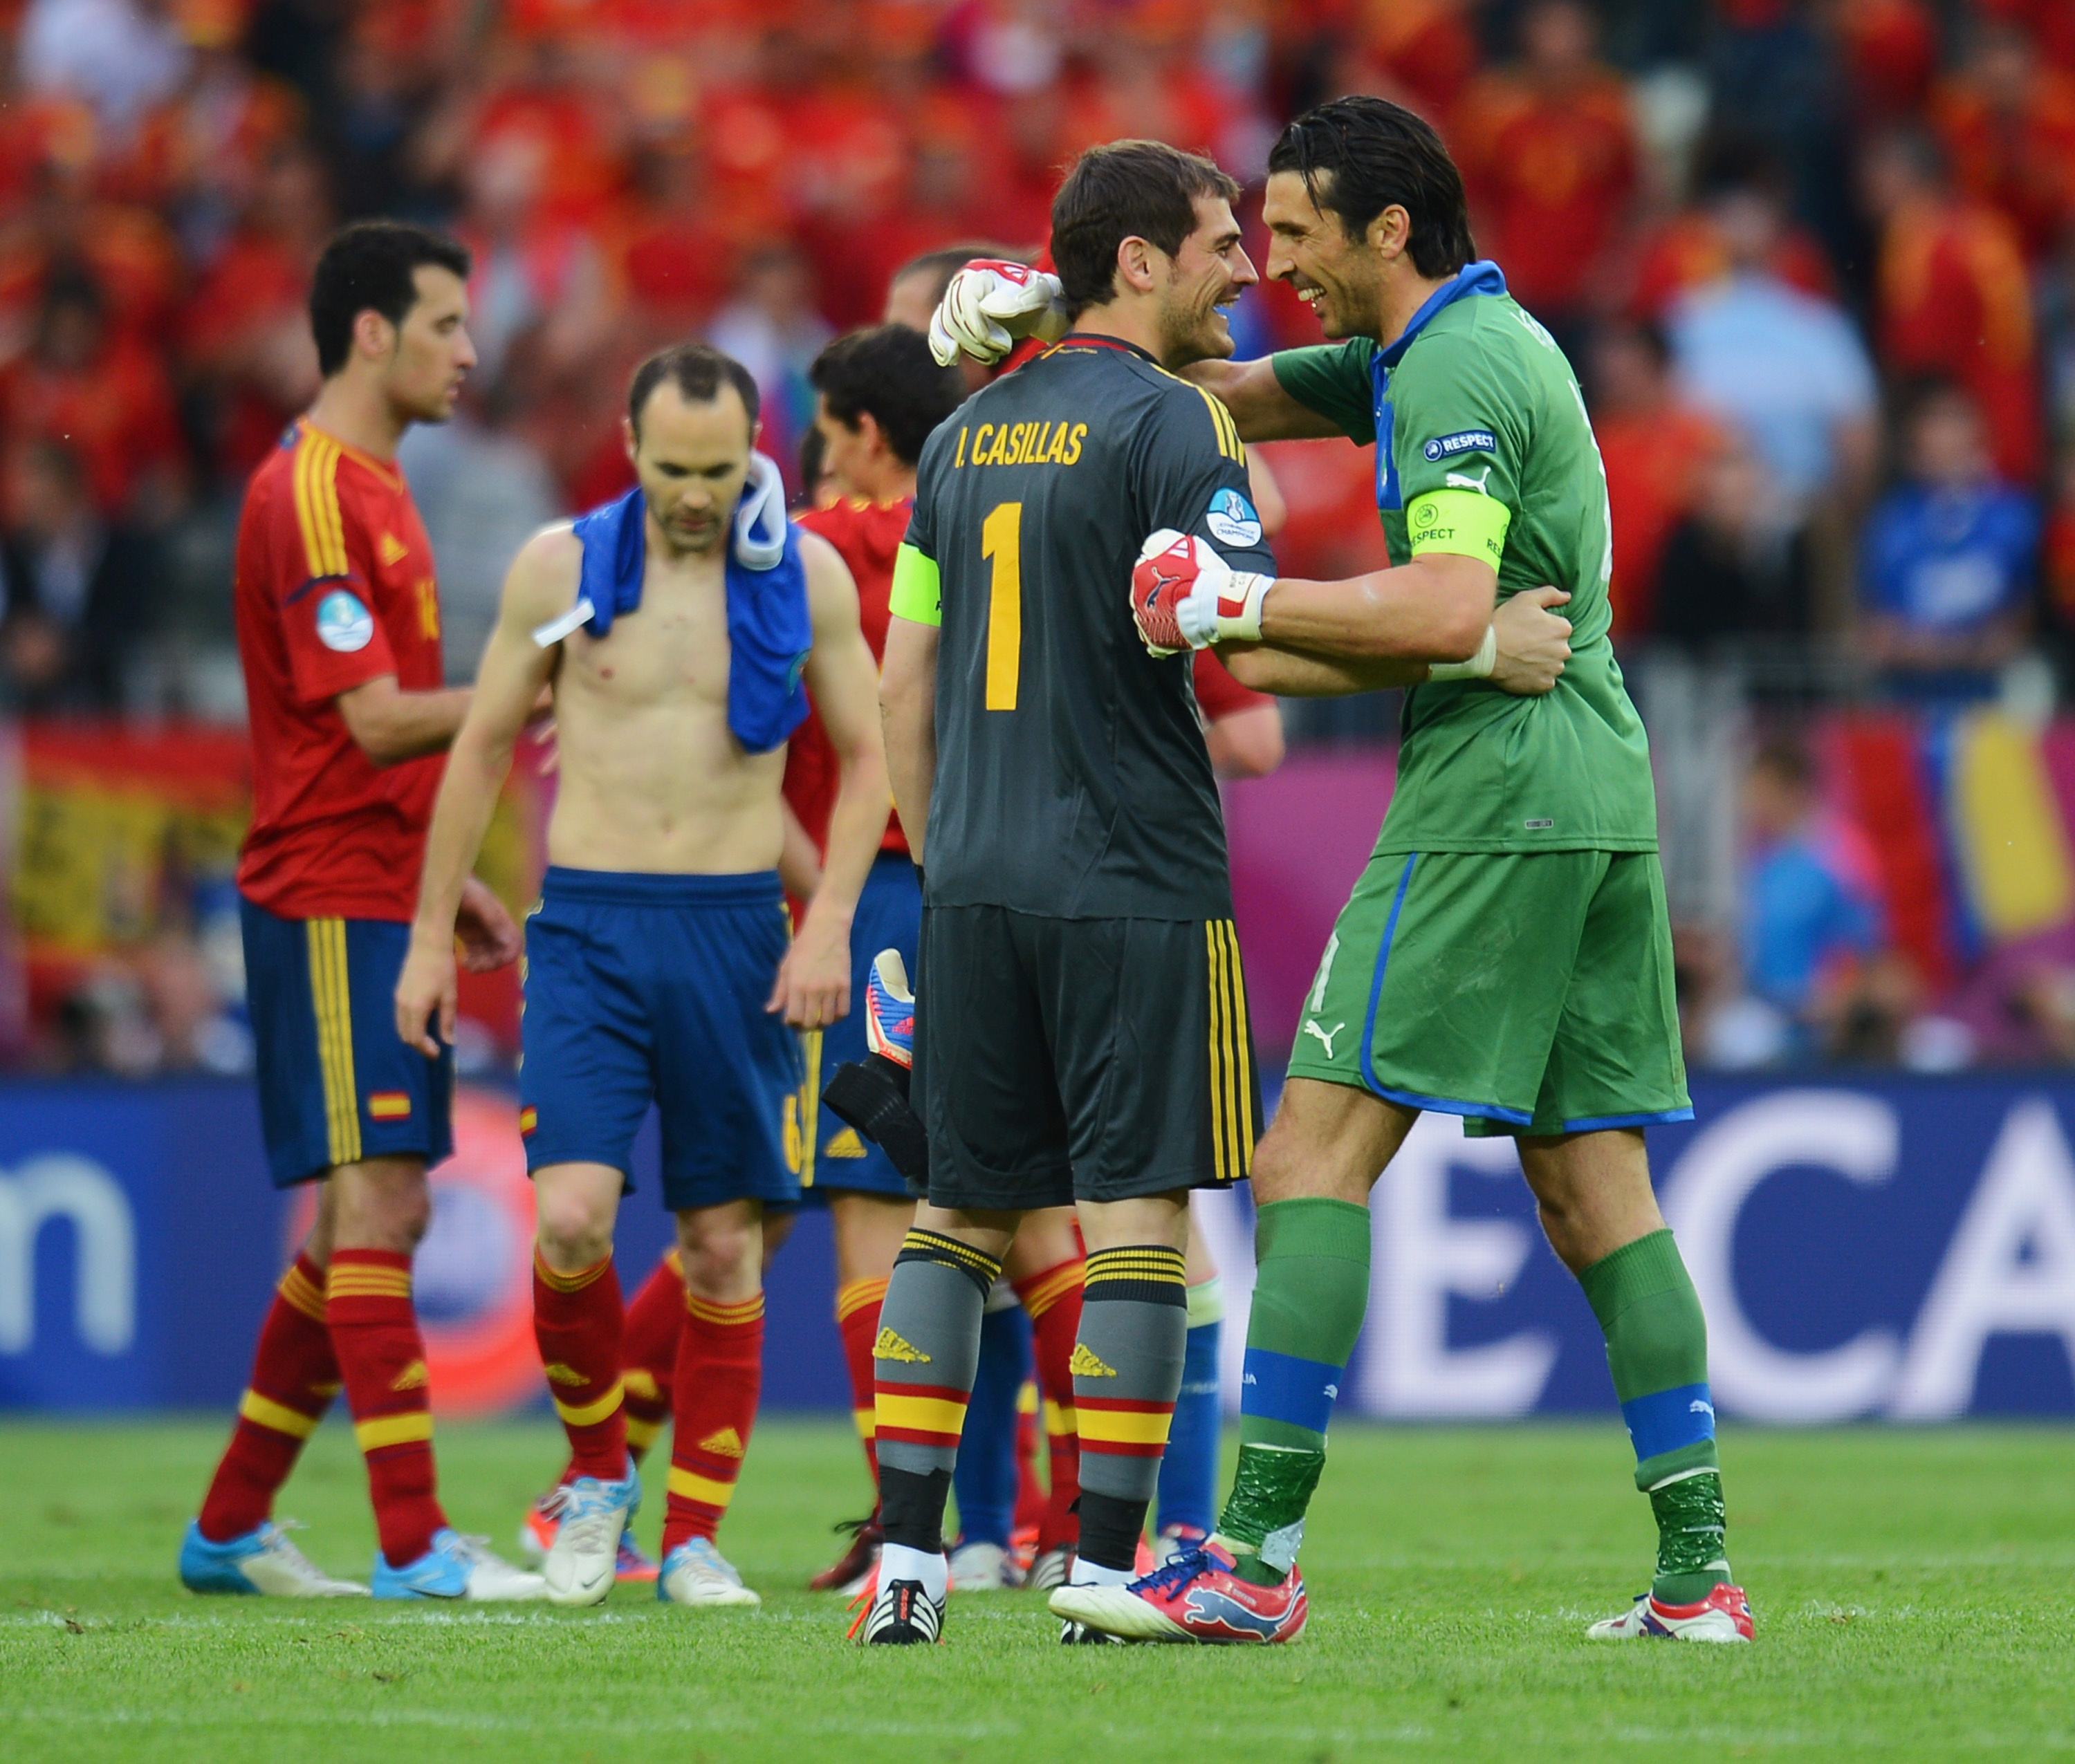 Fotboll, Iker Casillas, Gianluigi Buffon, EM, Italien, Spanien